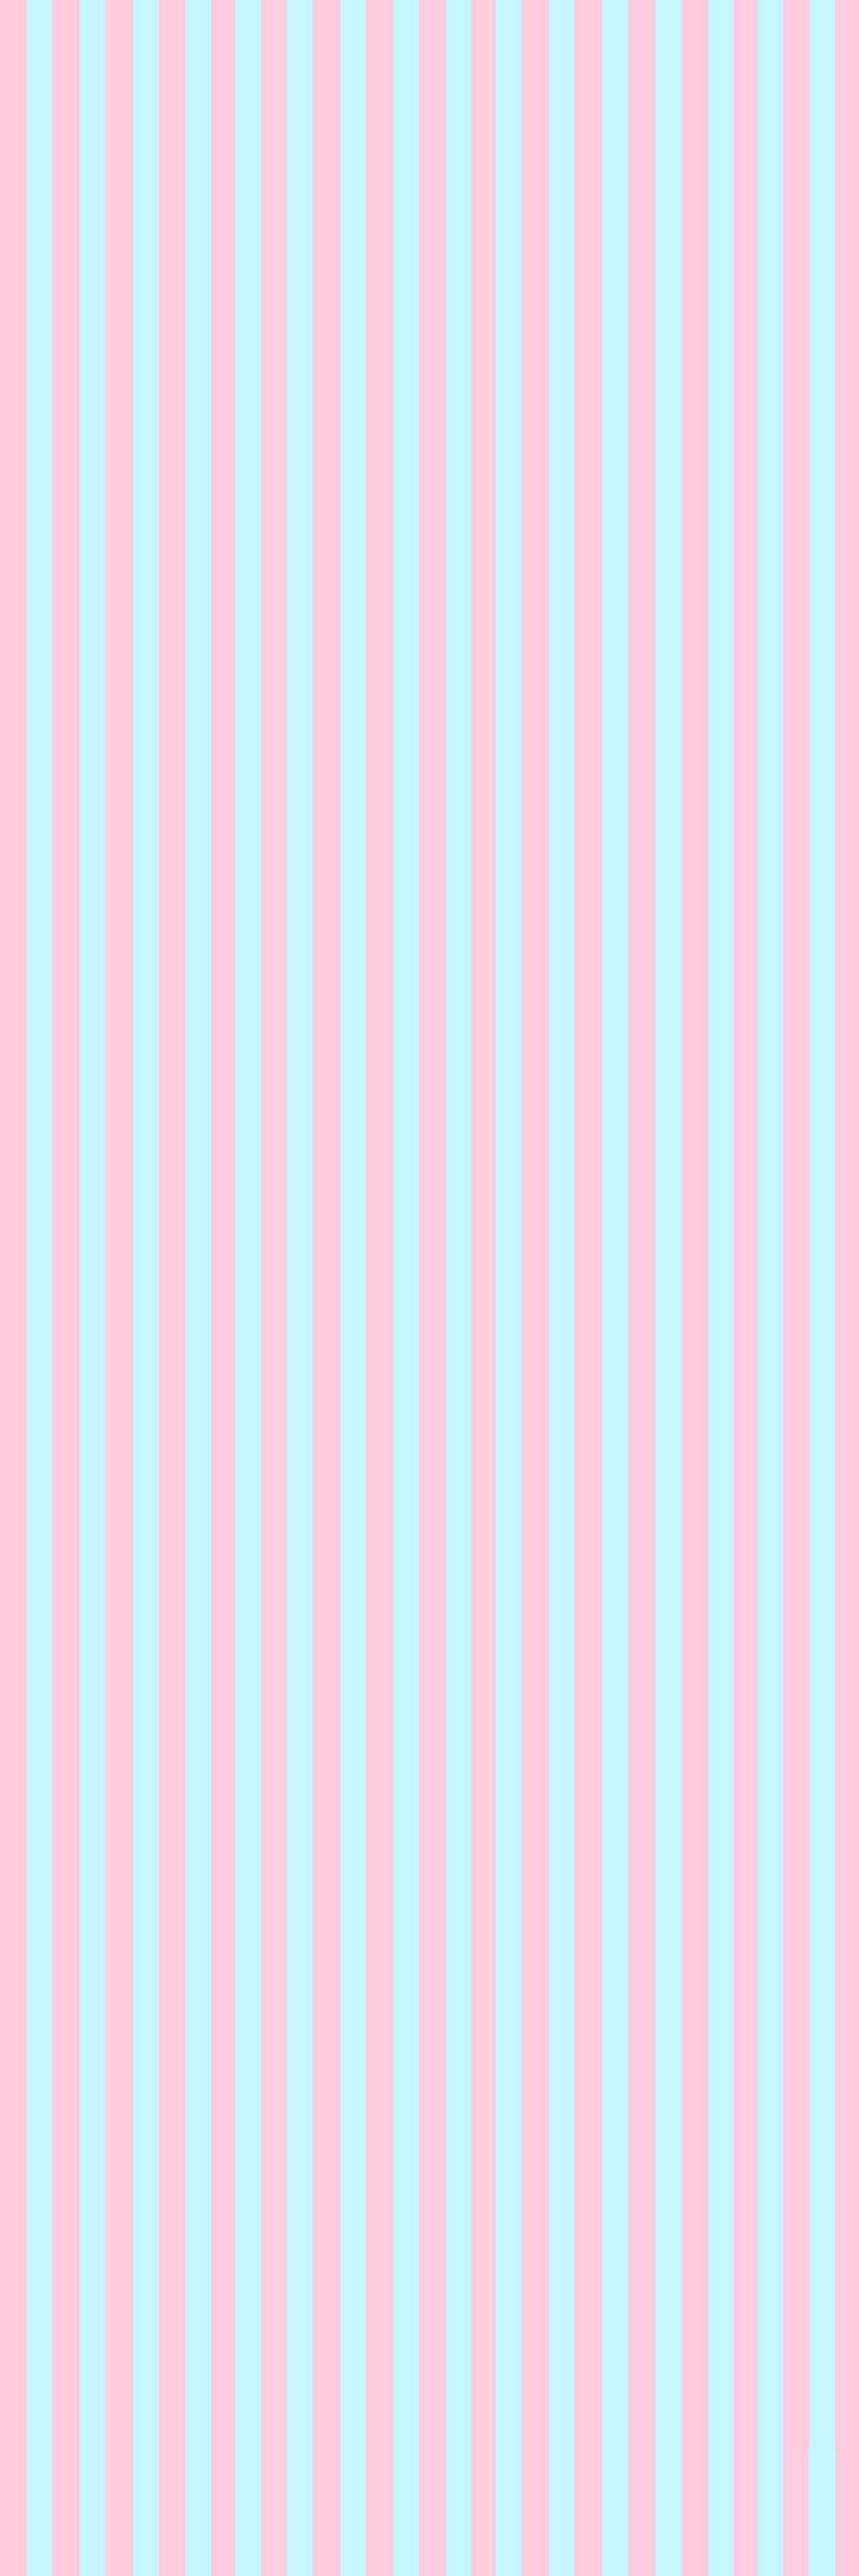 48+] Blue and Pink Wallpapers - WallpaperSafari